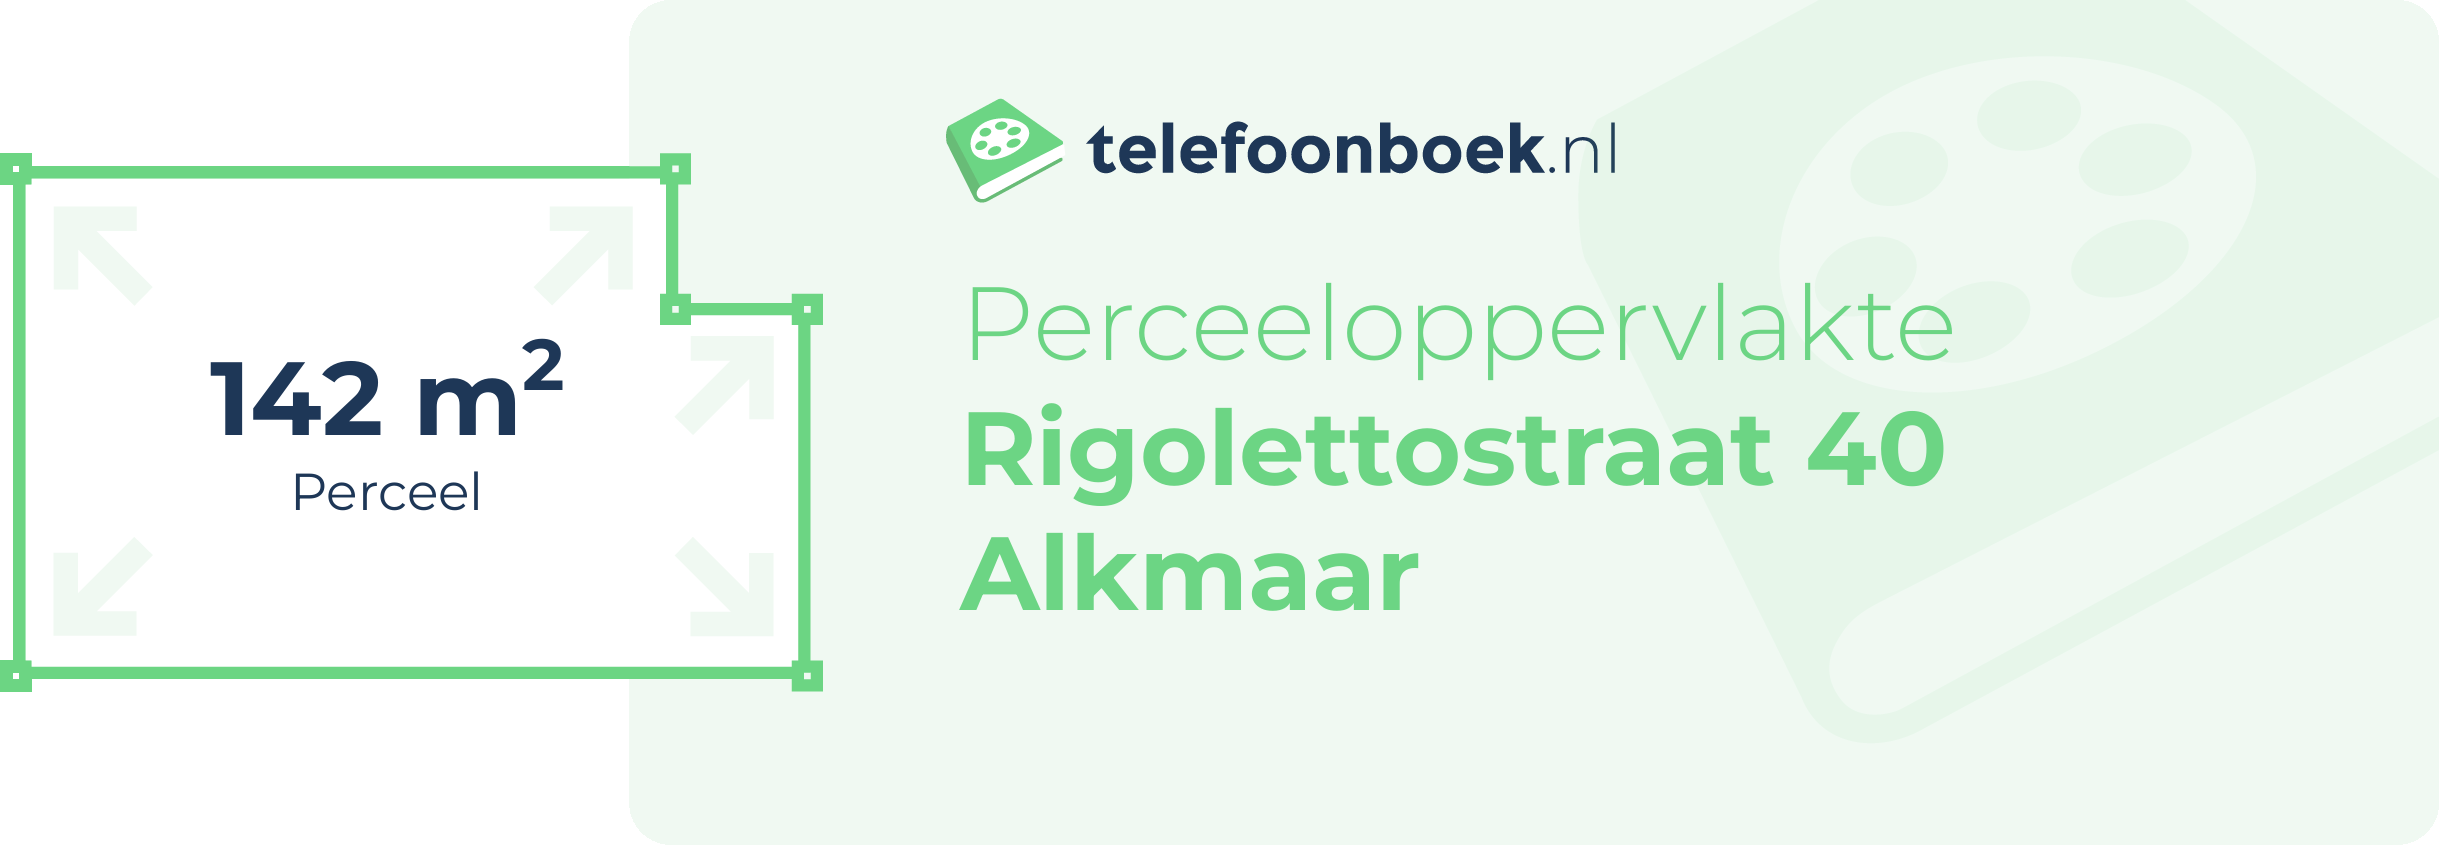 Perceeloppervlakte Rigolettostraat 40 Alkmaar